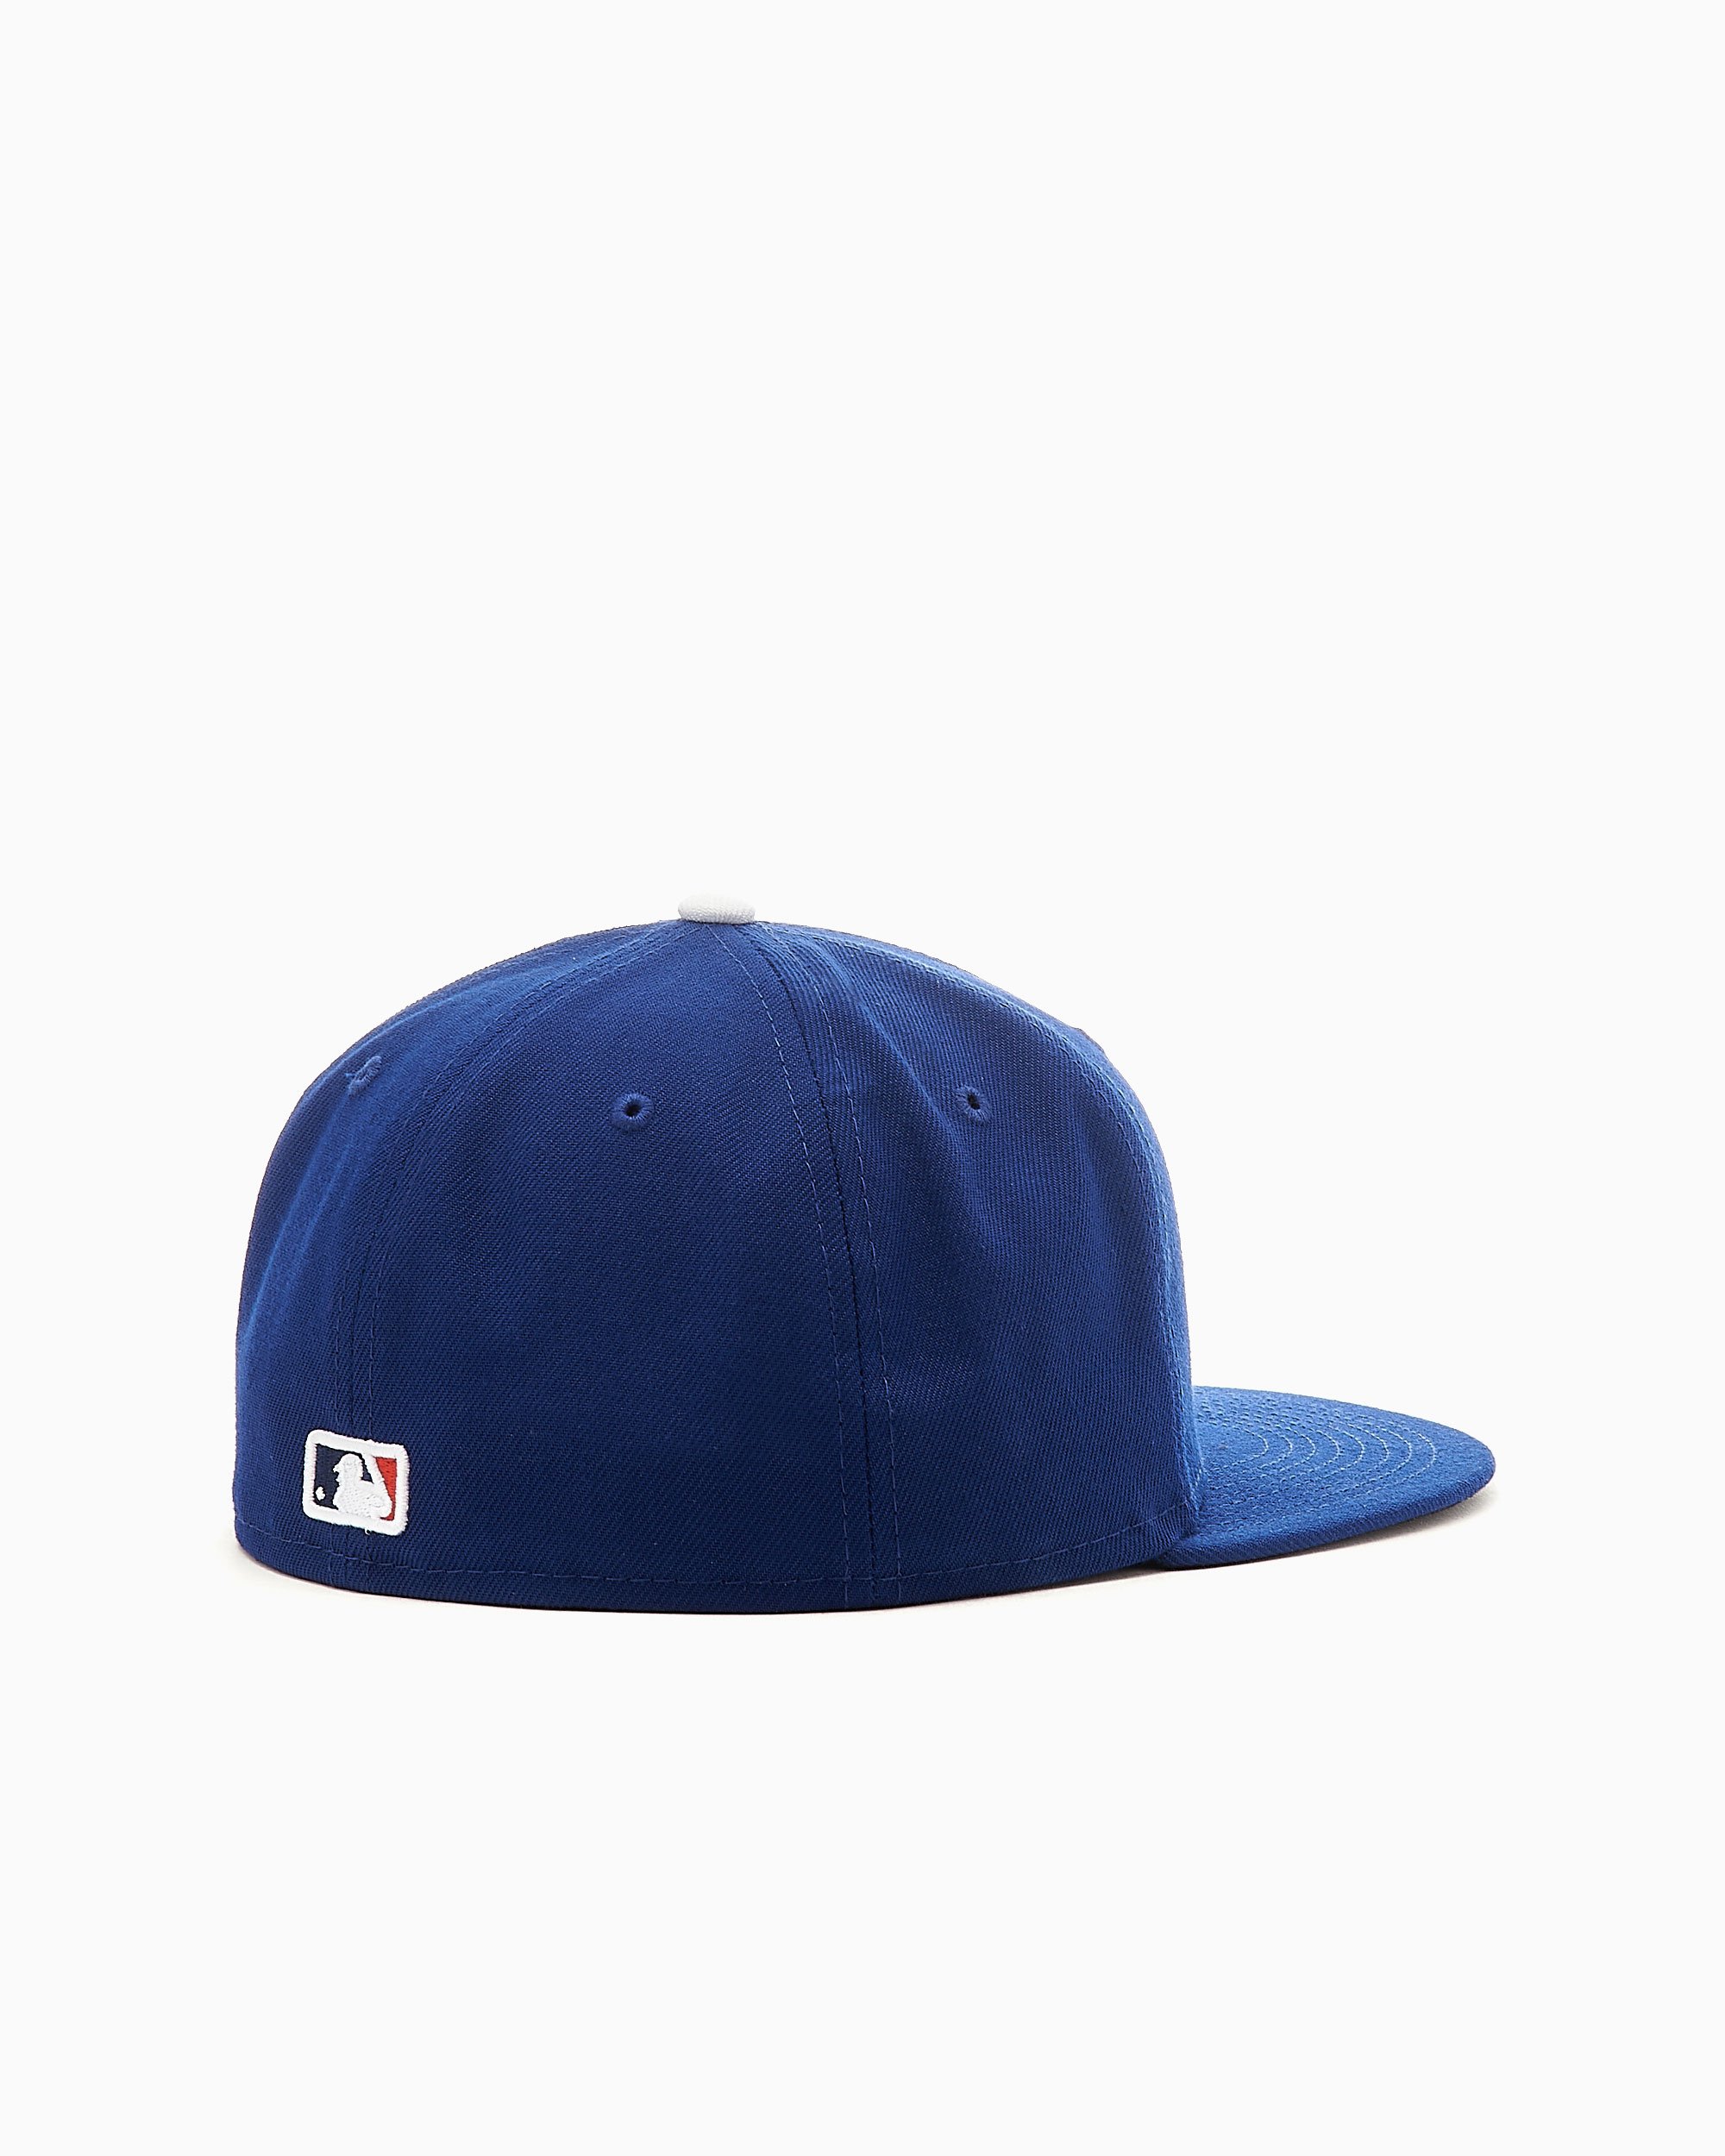 Buy Premium New Era LA Dodgers Authentic On Field Game Blue 59FIFTY Cap  Online